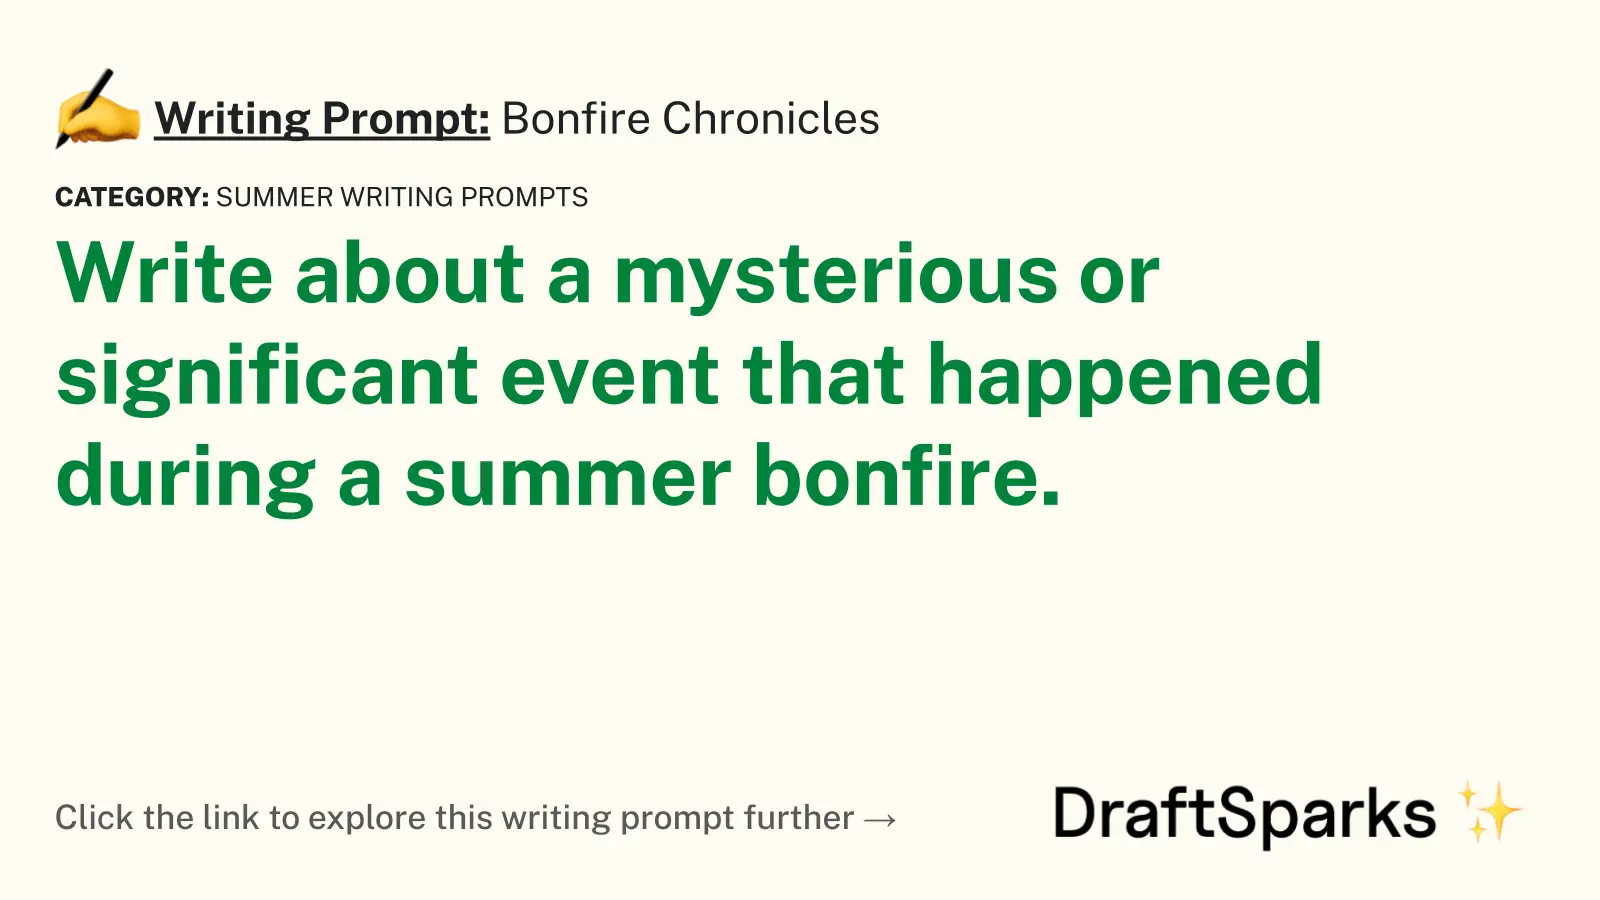 Bonfire Chronicles